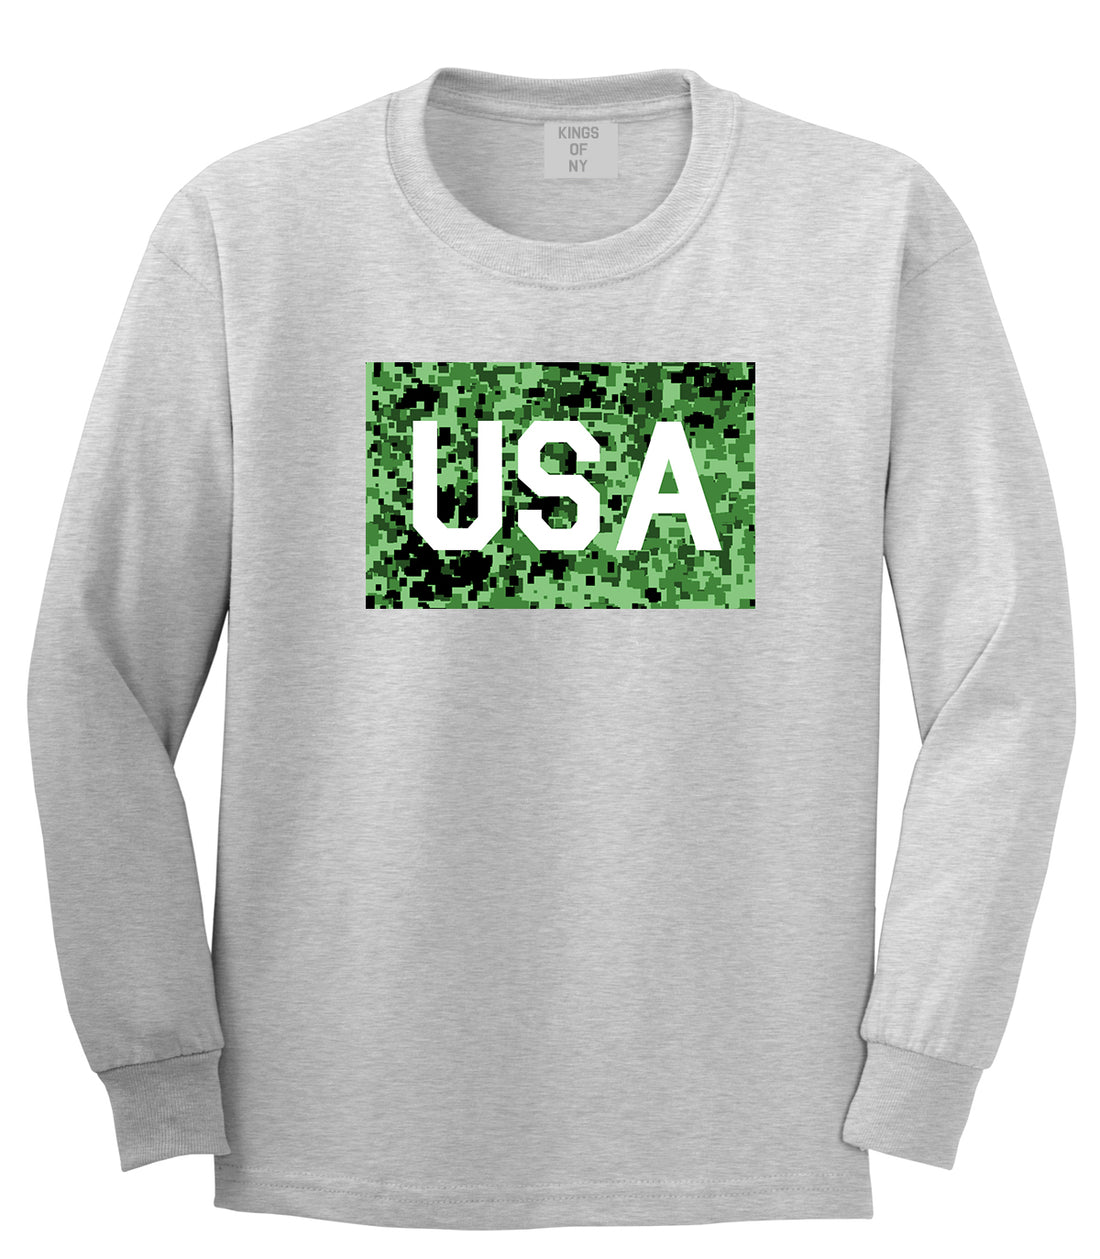 USA Digital Camo Army Mens Grey Long Sleeve T-Shirt by Kings Of NY